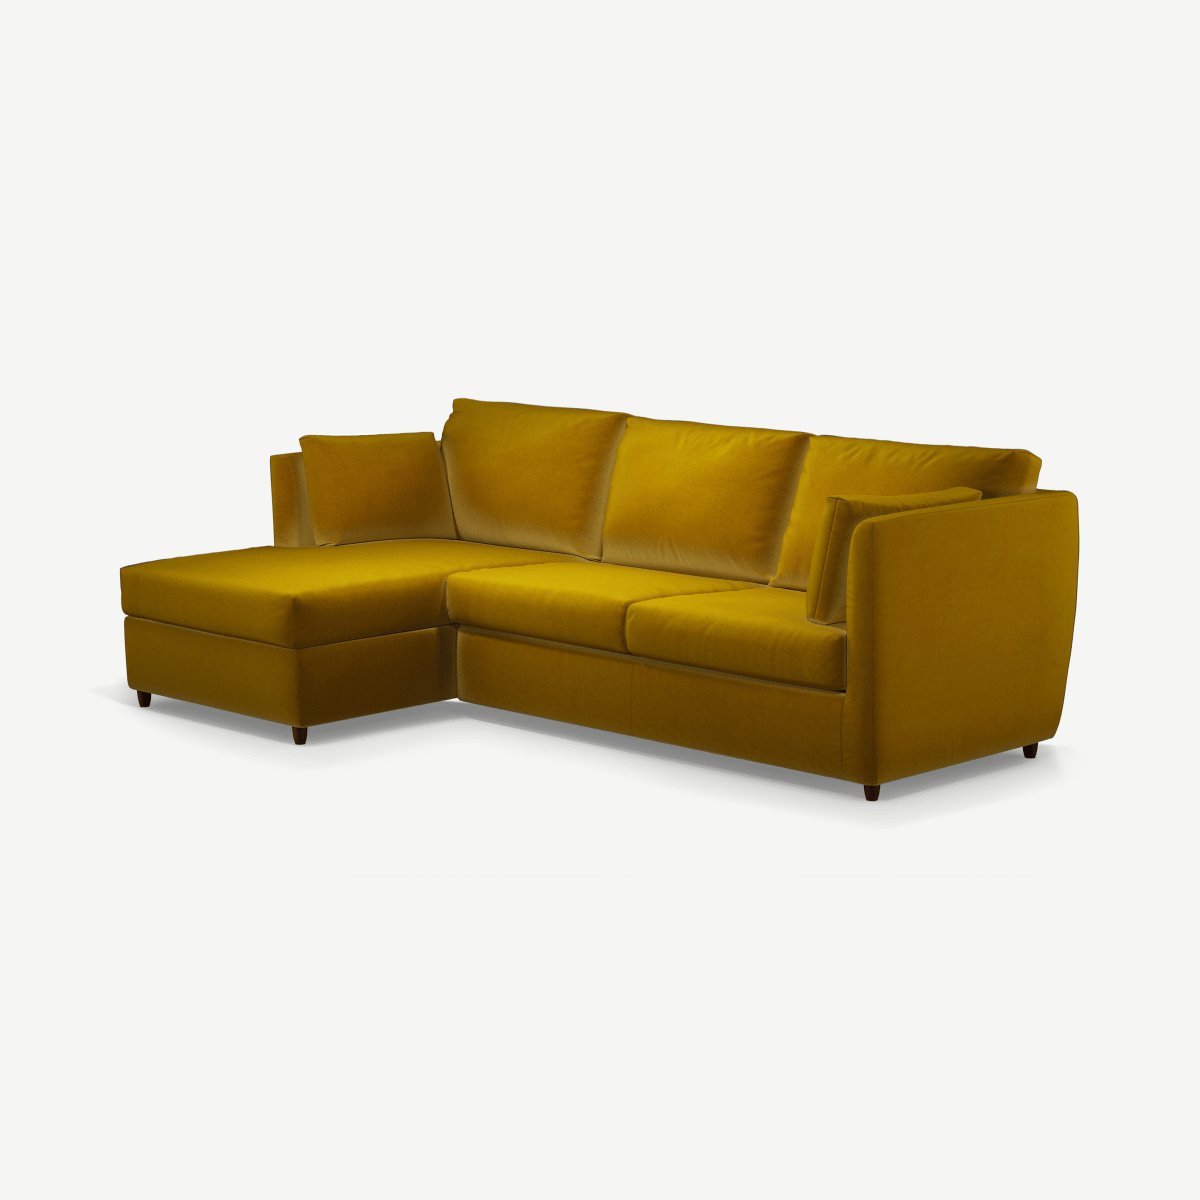 Milner Left Hand Facing Corner Storage Sofa Bed with Foam Mattress, Saffron Yellow Velvet